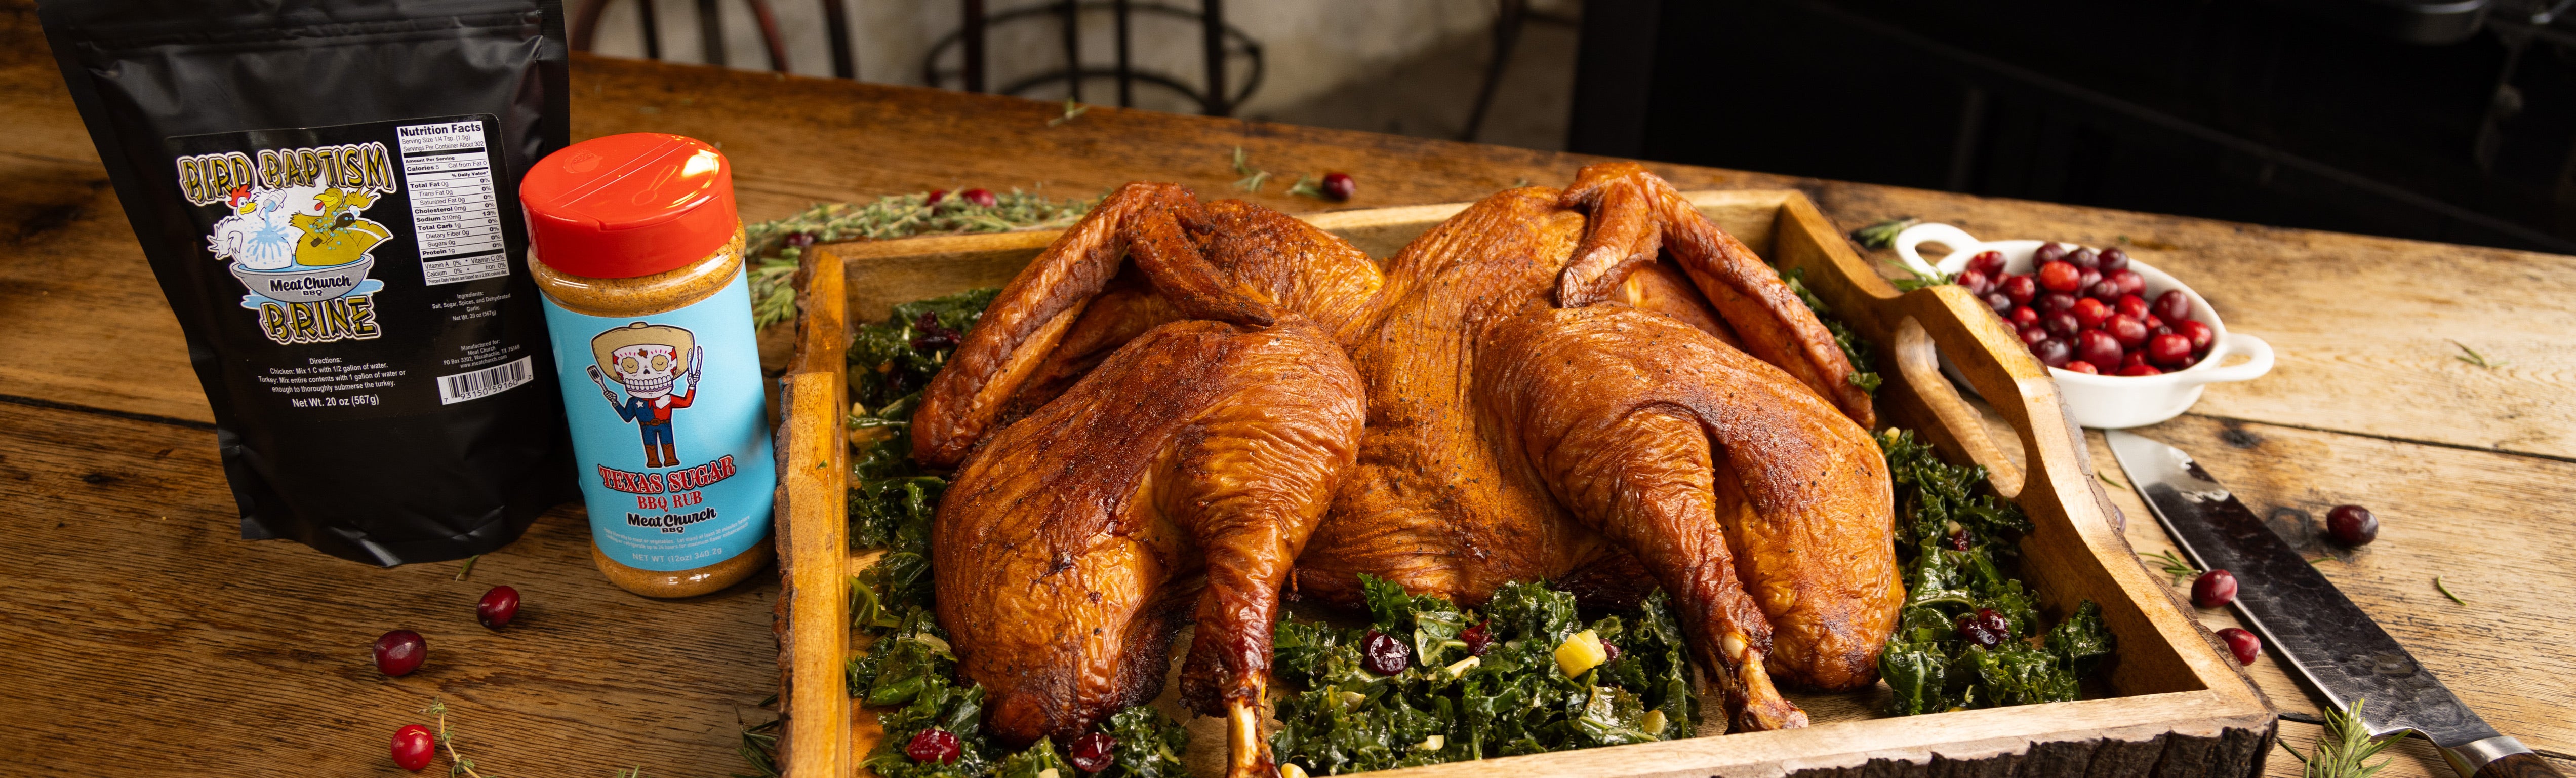 Meat Church Poultry Brine Recipe – BBQRubs